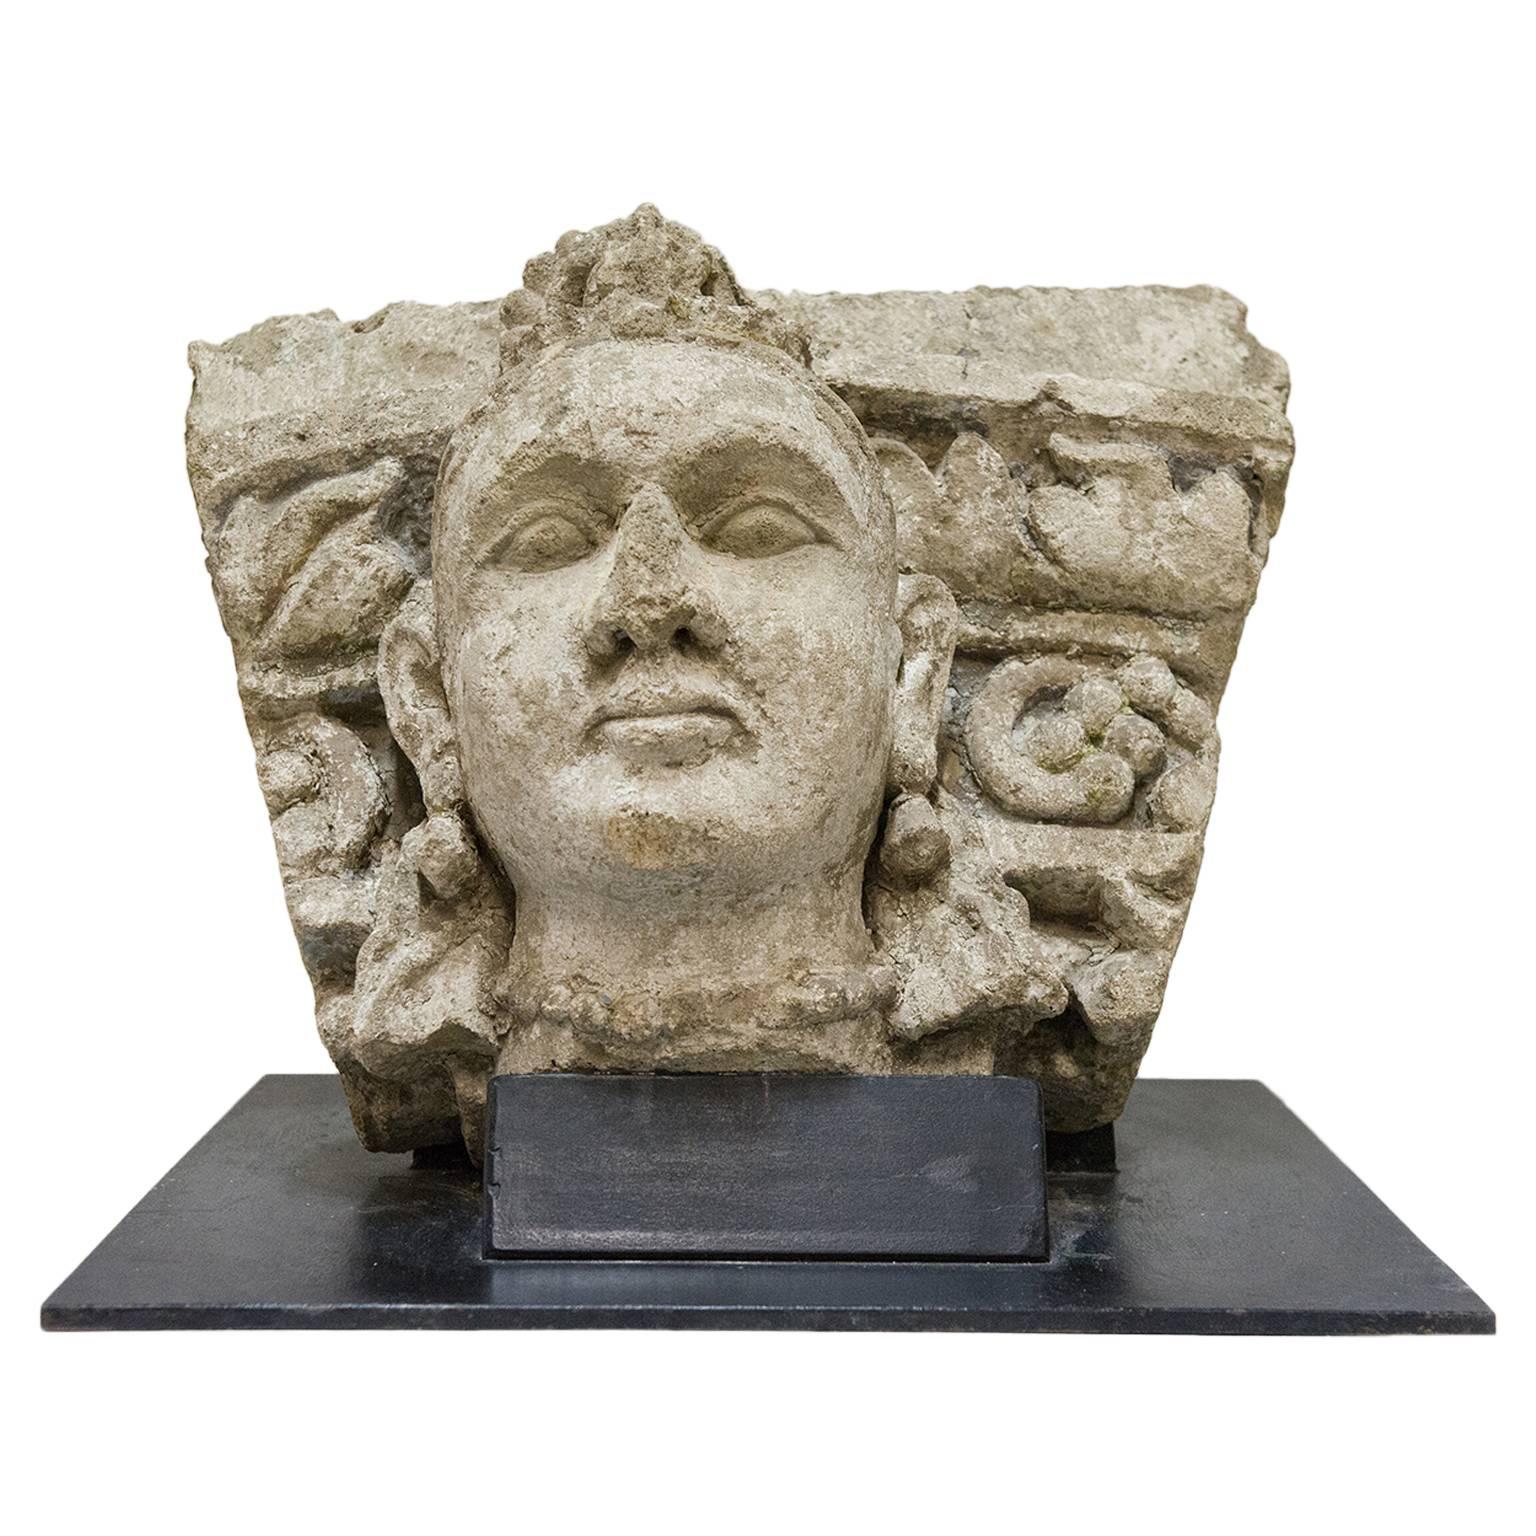  Museal Stone Gandhara Large Sculpture For Sale